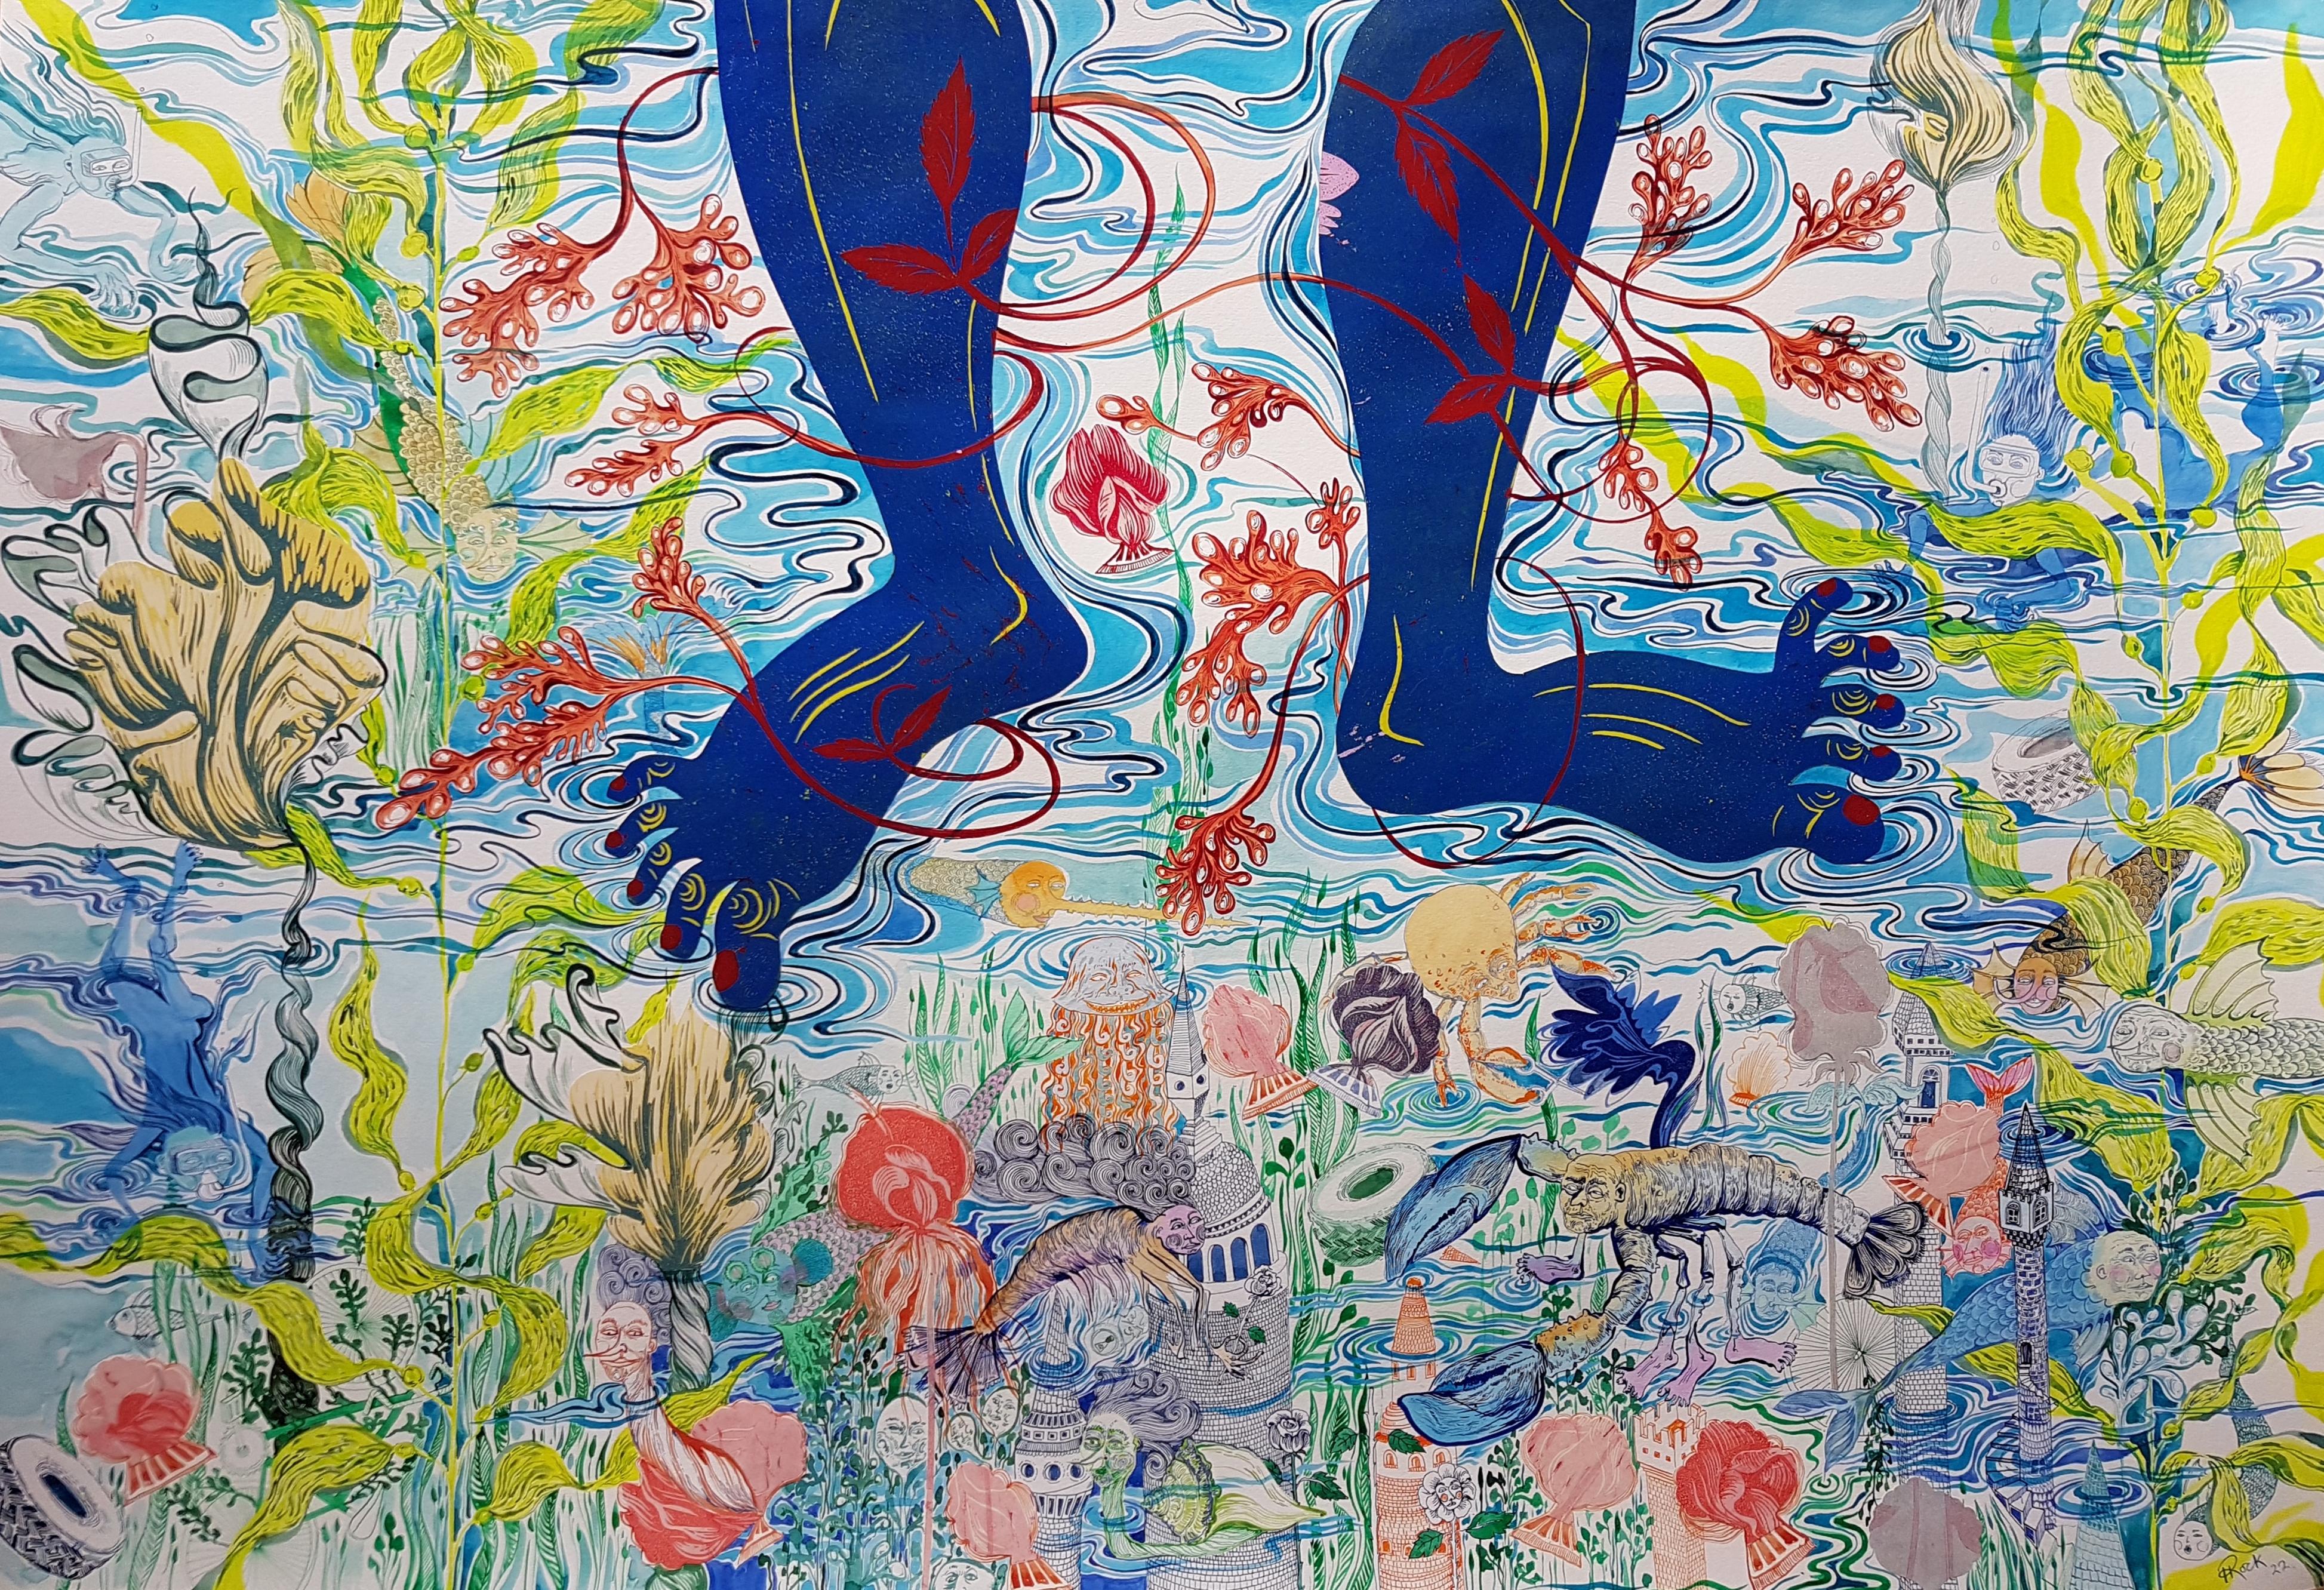 Isabel Rock Figurative Painting - Surrealist Royal College of Art Large Painting Women LGBTQ+ Blue Feet Swim Lake